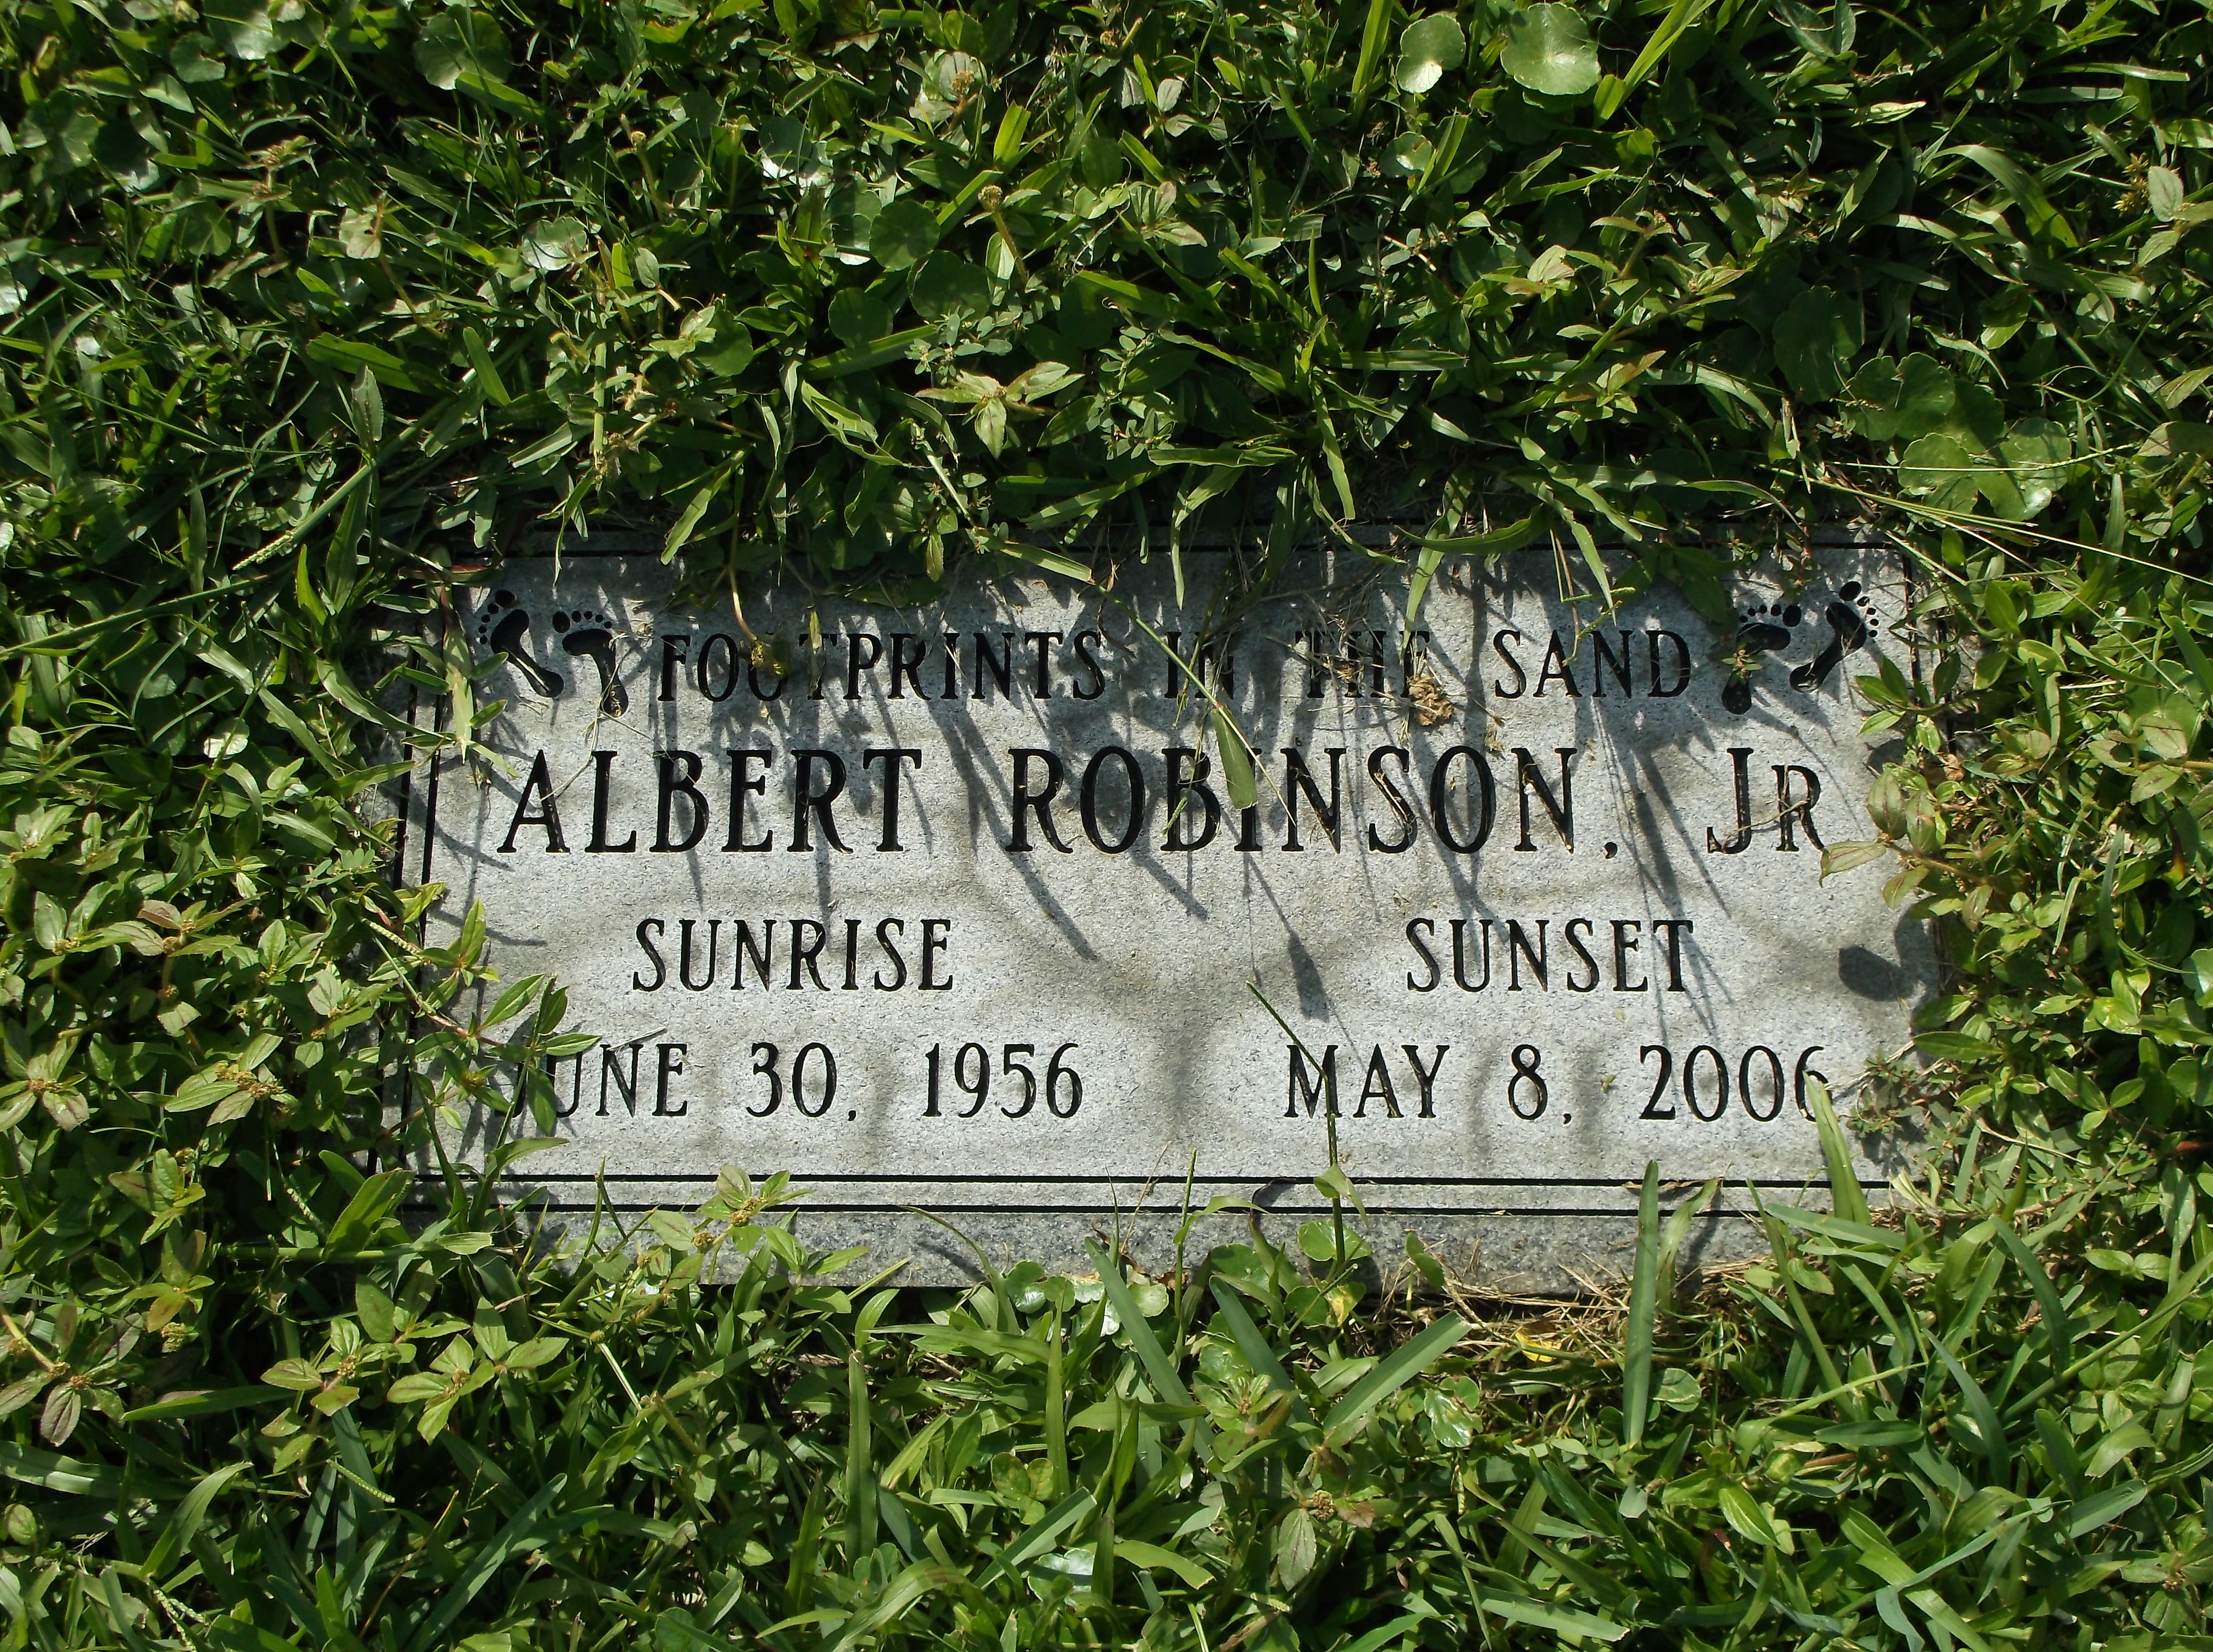 Albert Robinson, Jr